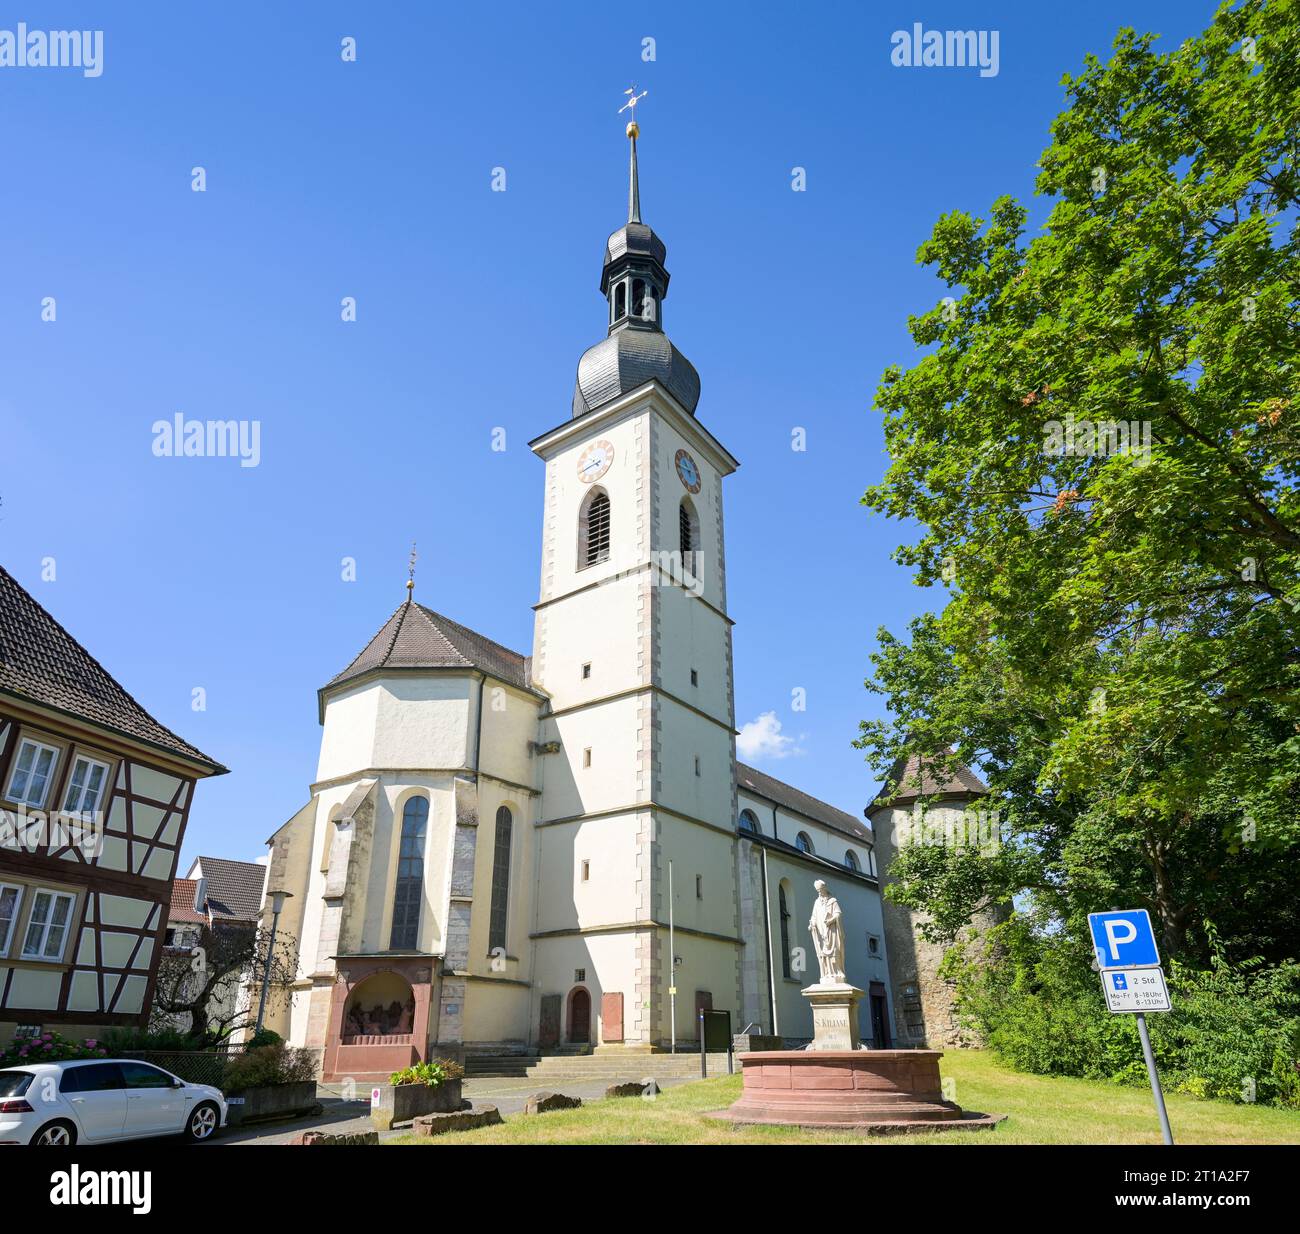 Stadtkirche St Jakobus, Altstadt, Lauda-Königshofen, Baden-Württemberg, Deutschland Foto Stock